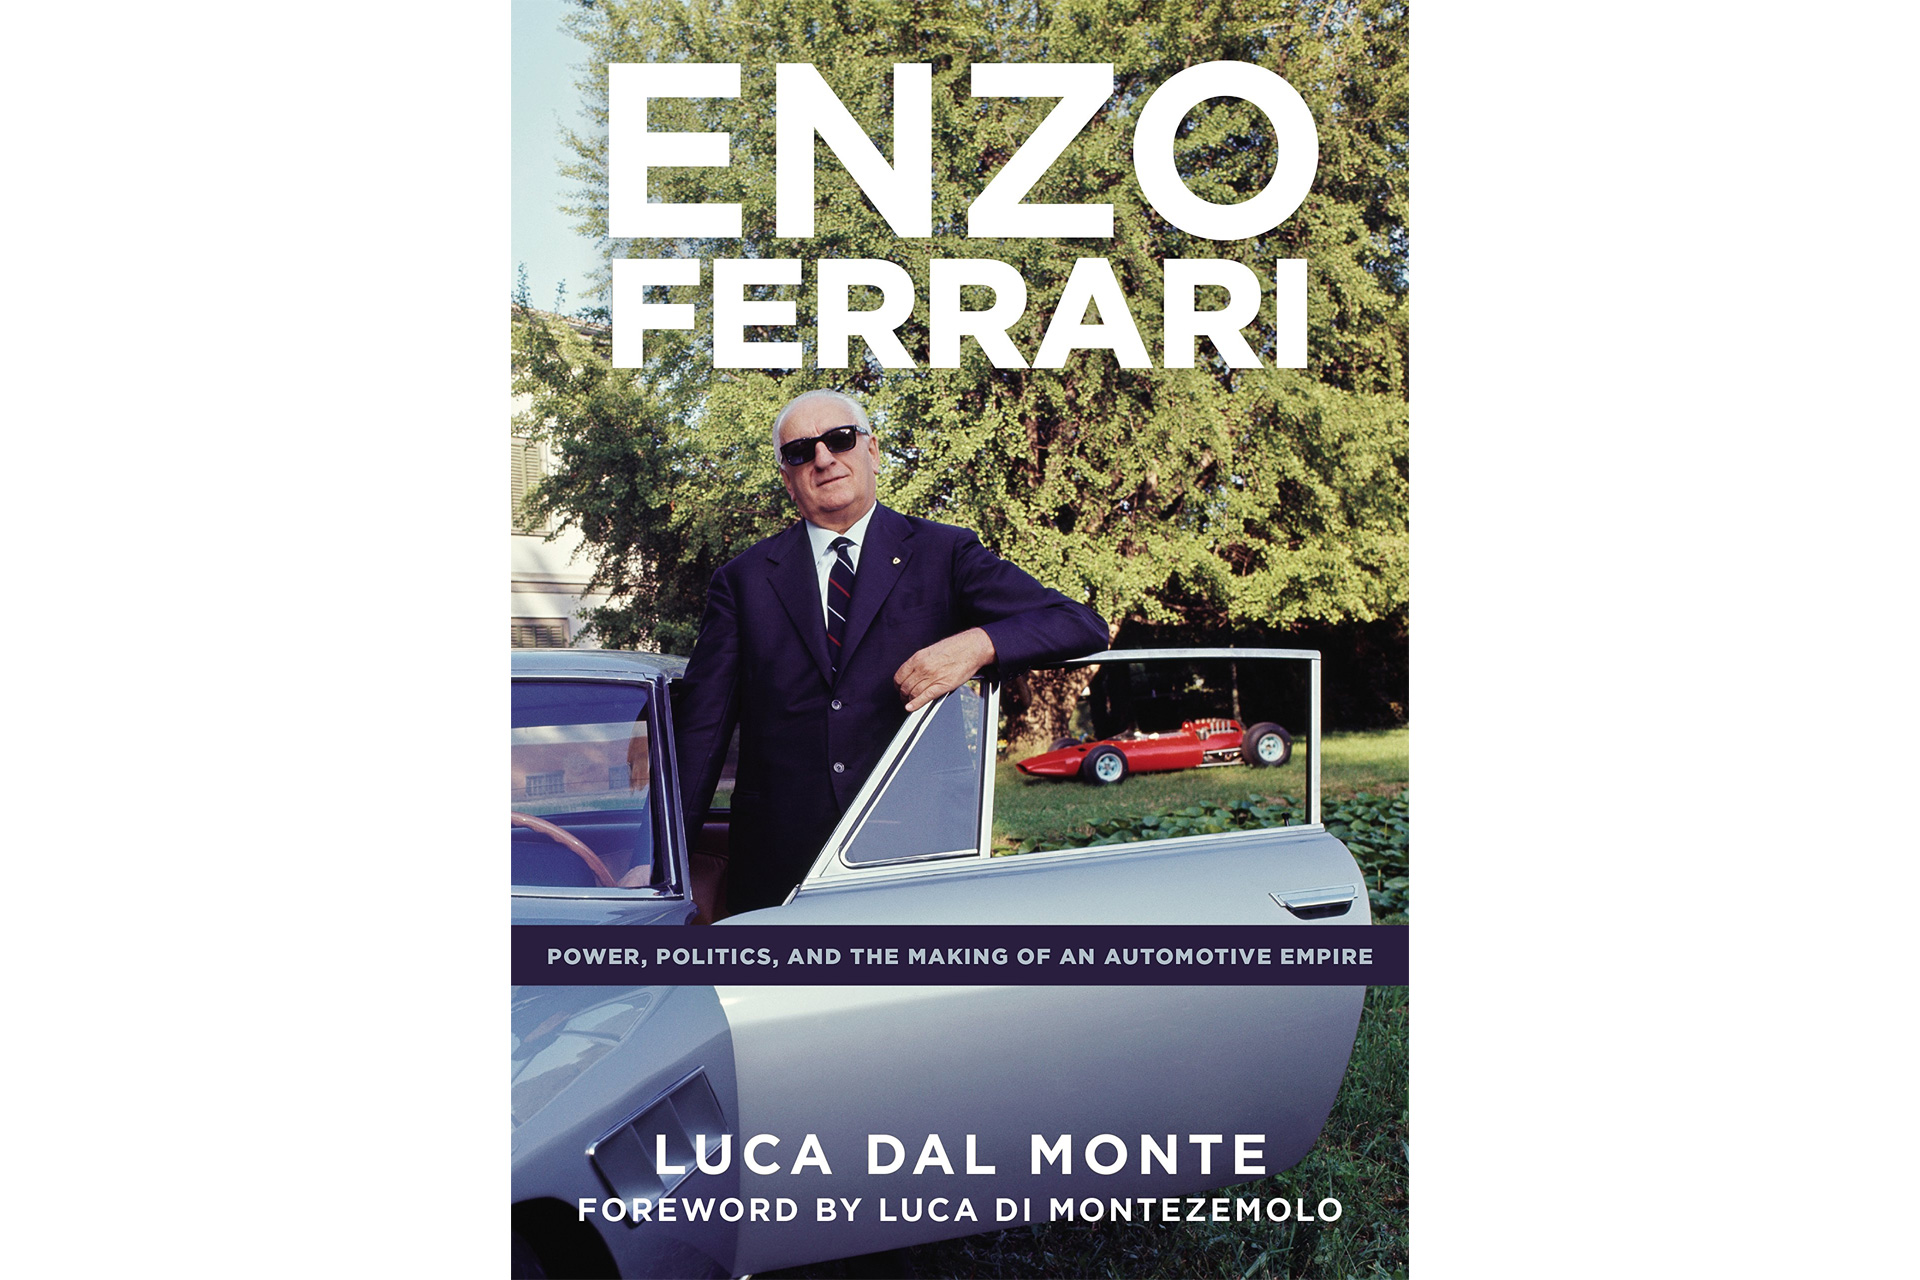 "Enzo Ferrari" by Luca dal Monte